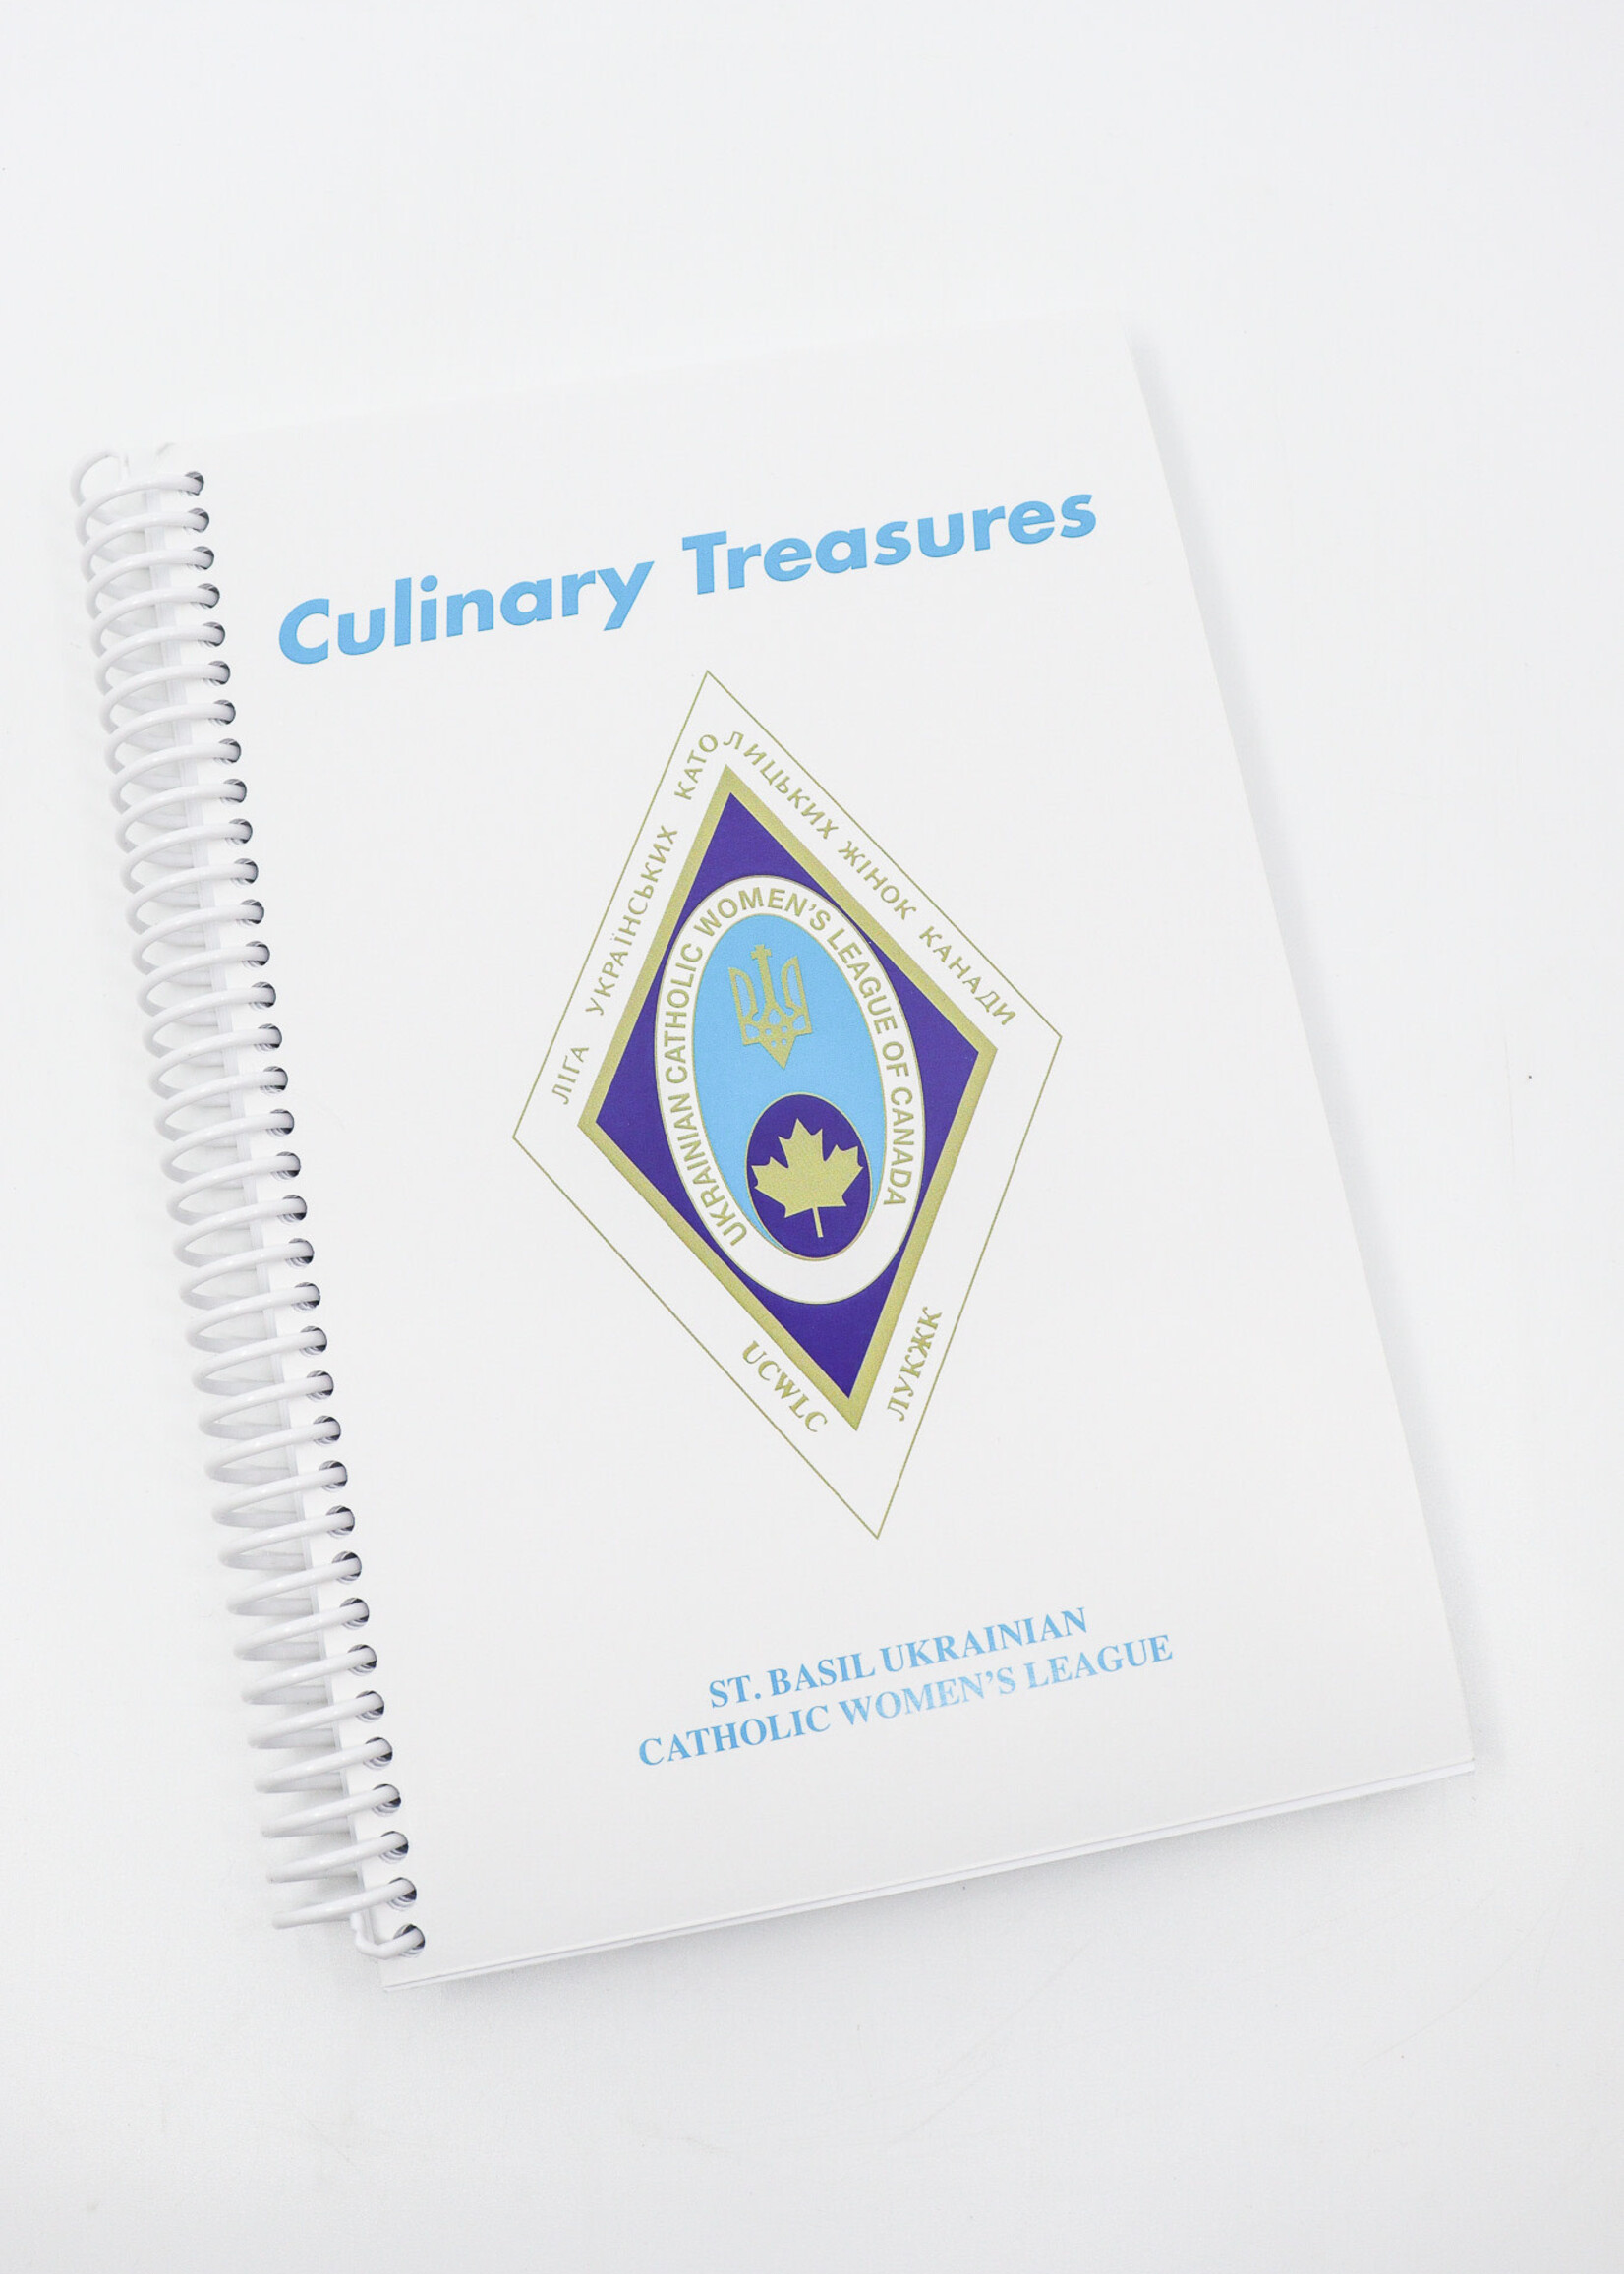 BOOK - Culinary Treasure, cookbook